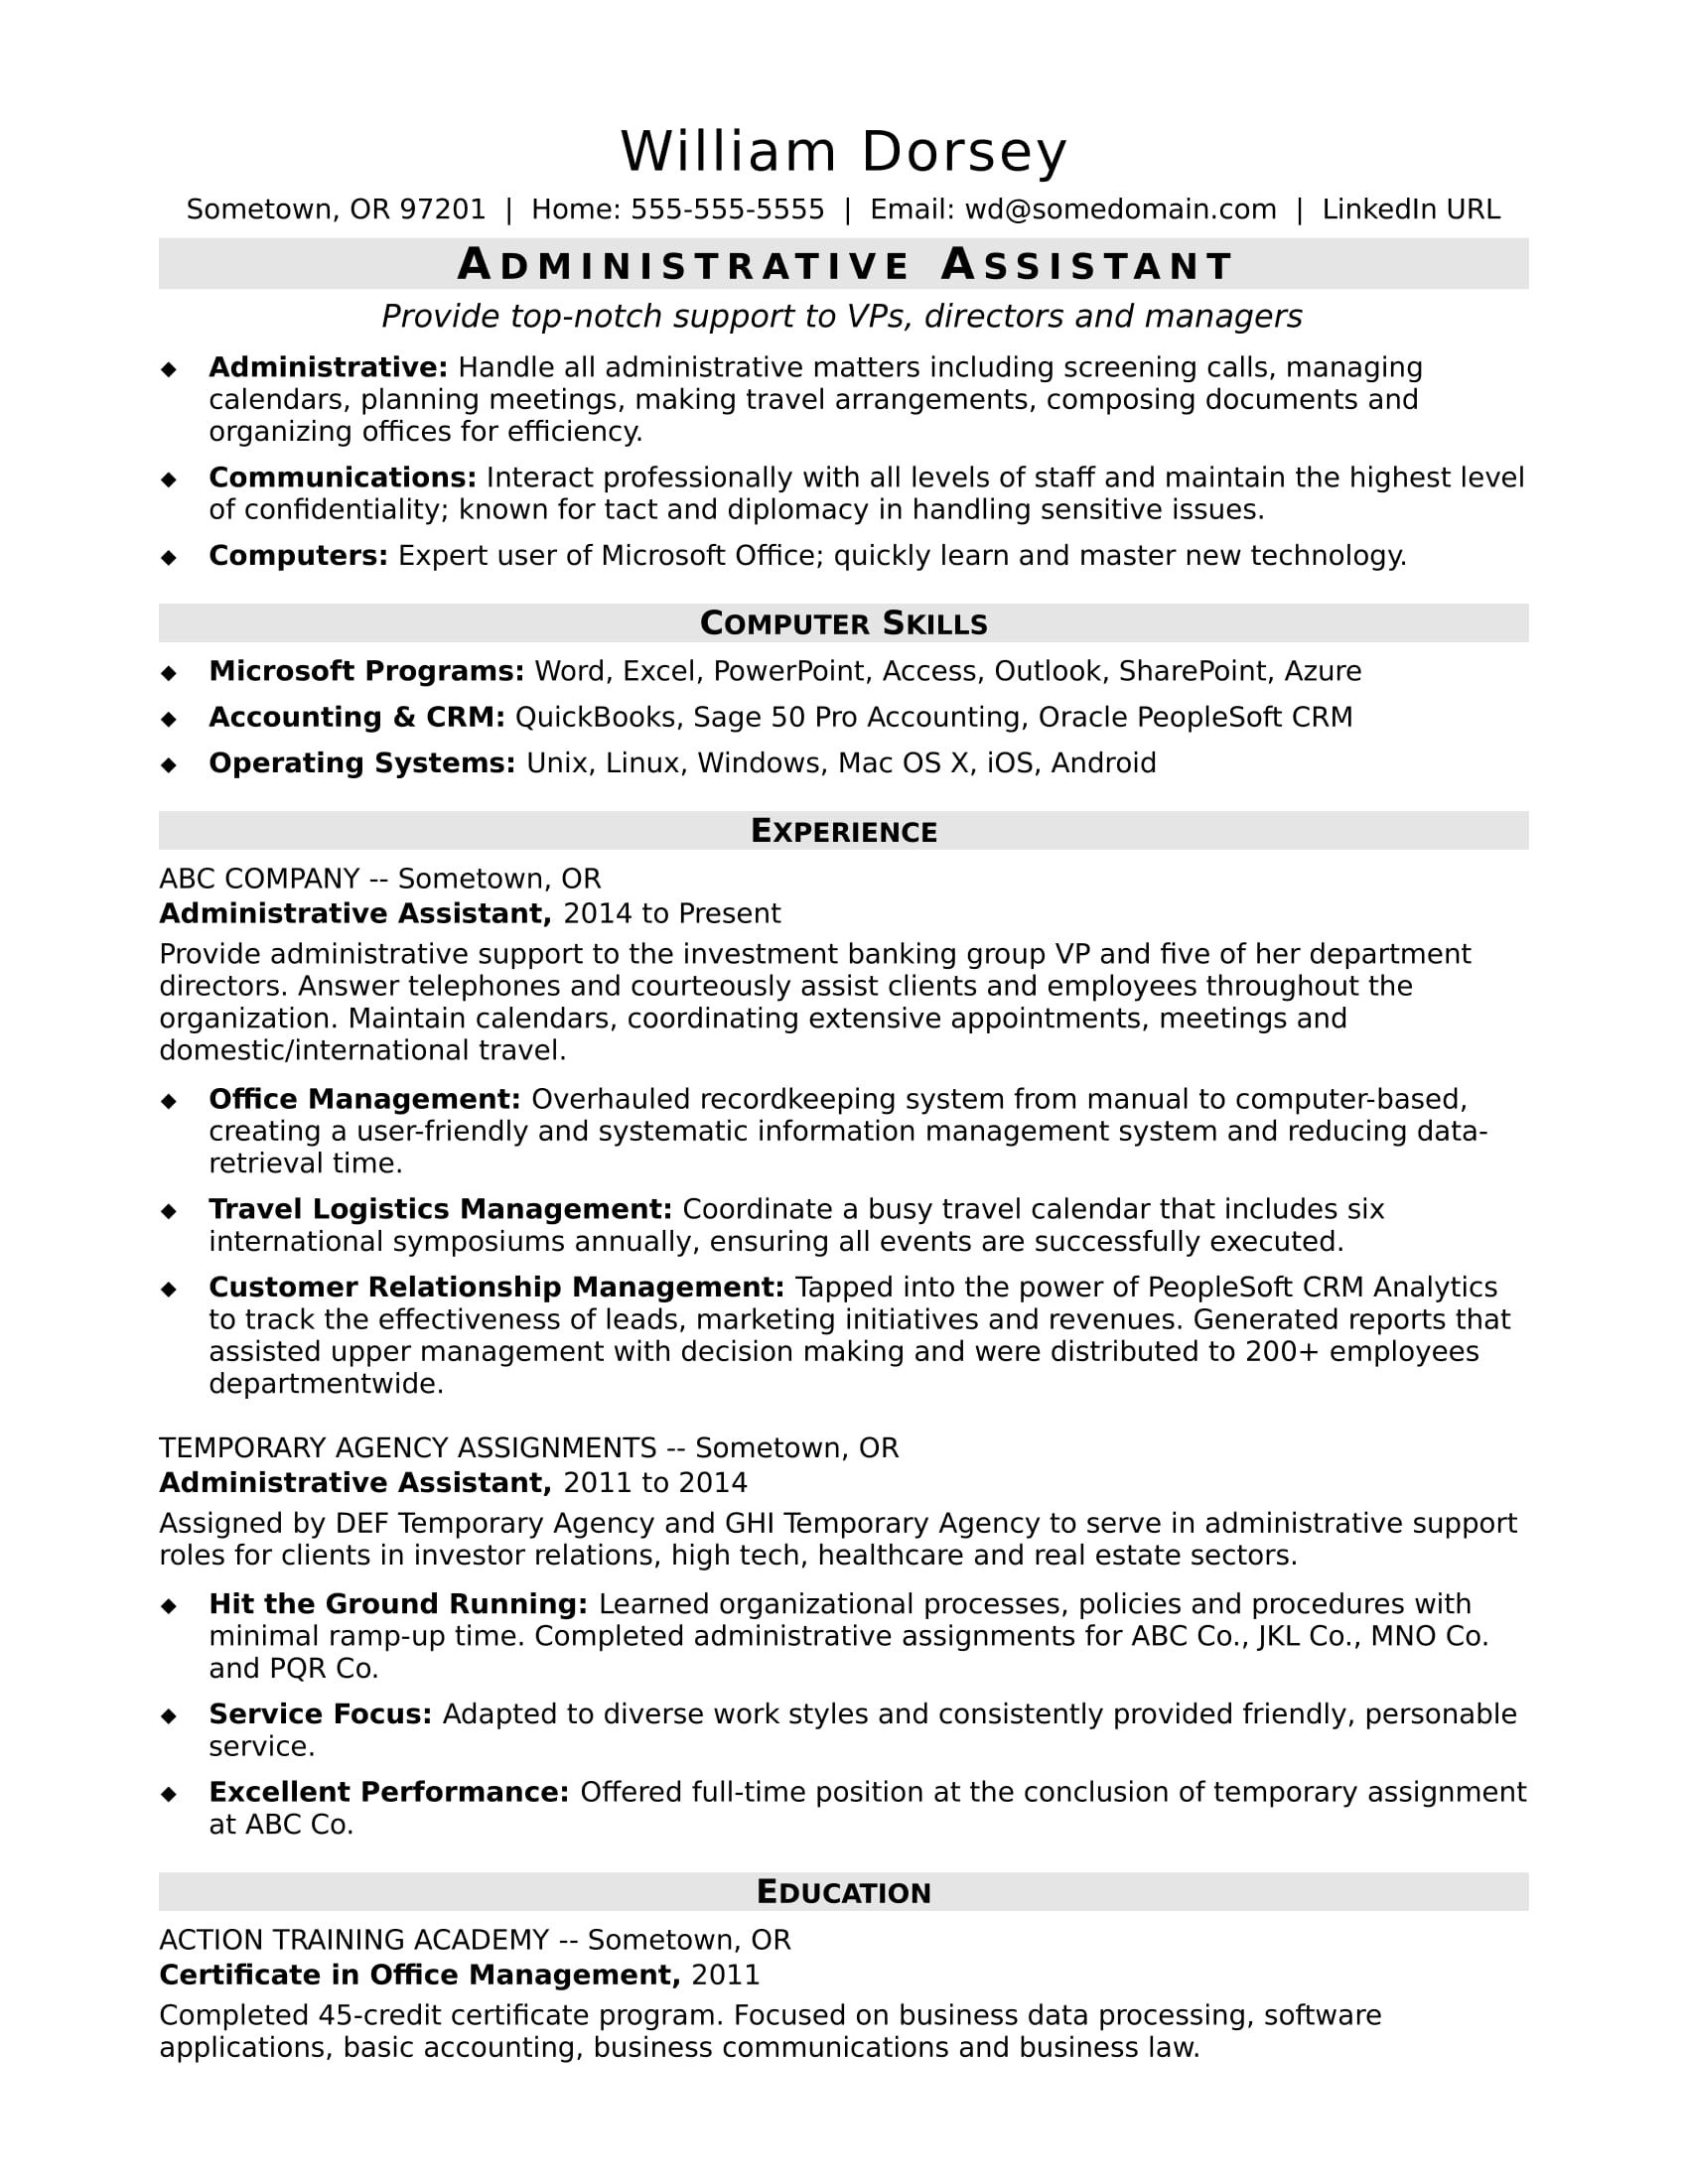 Entry Level Administrative assistant Resume Templates Midlevel Administrative assistant Resume Sample Monster.com